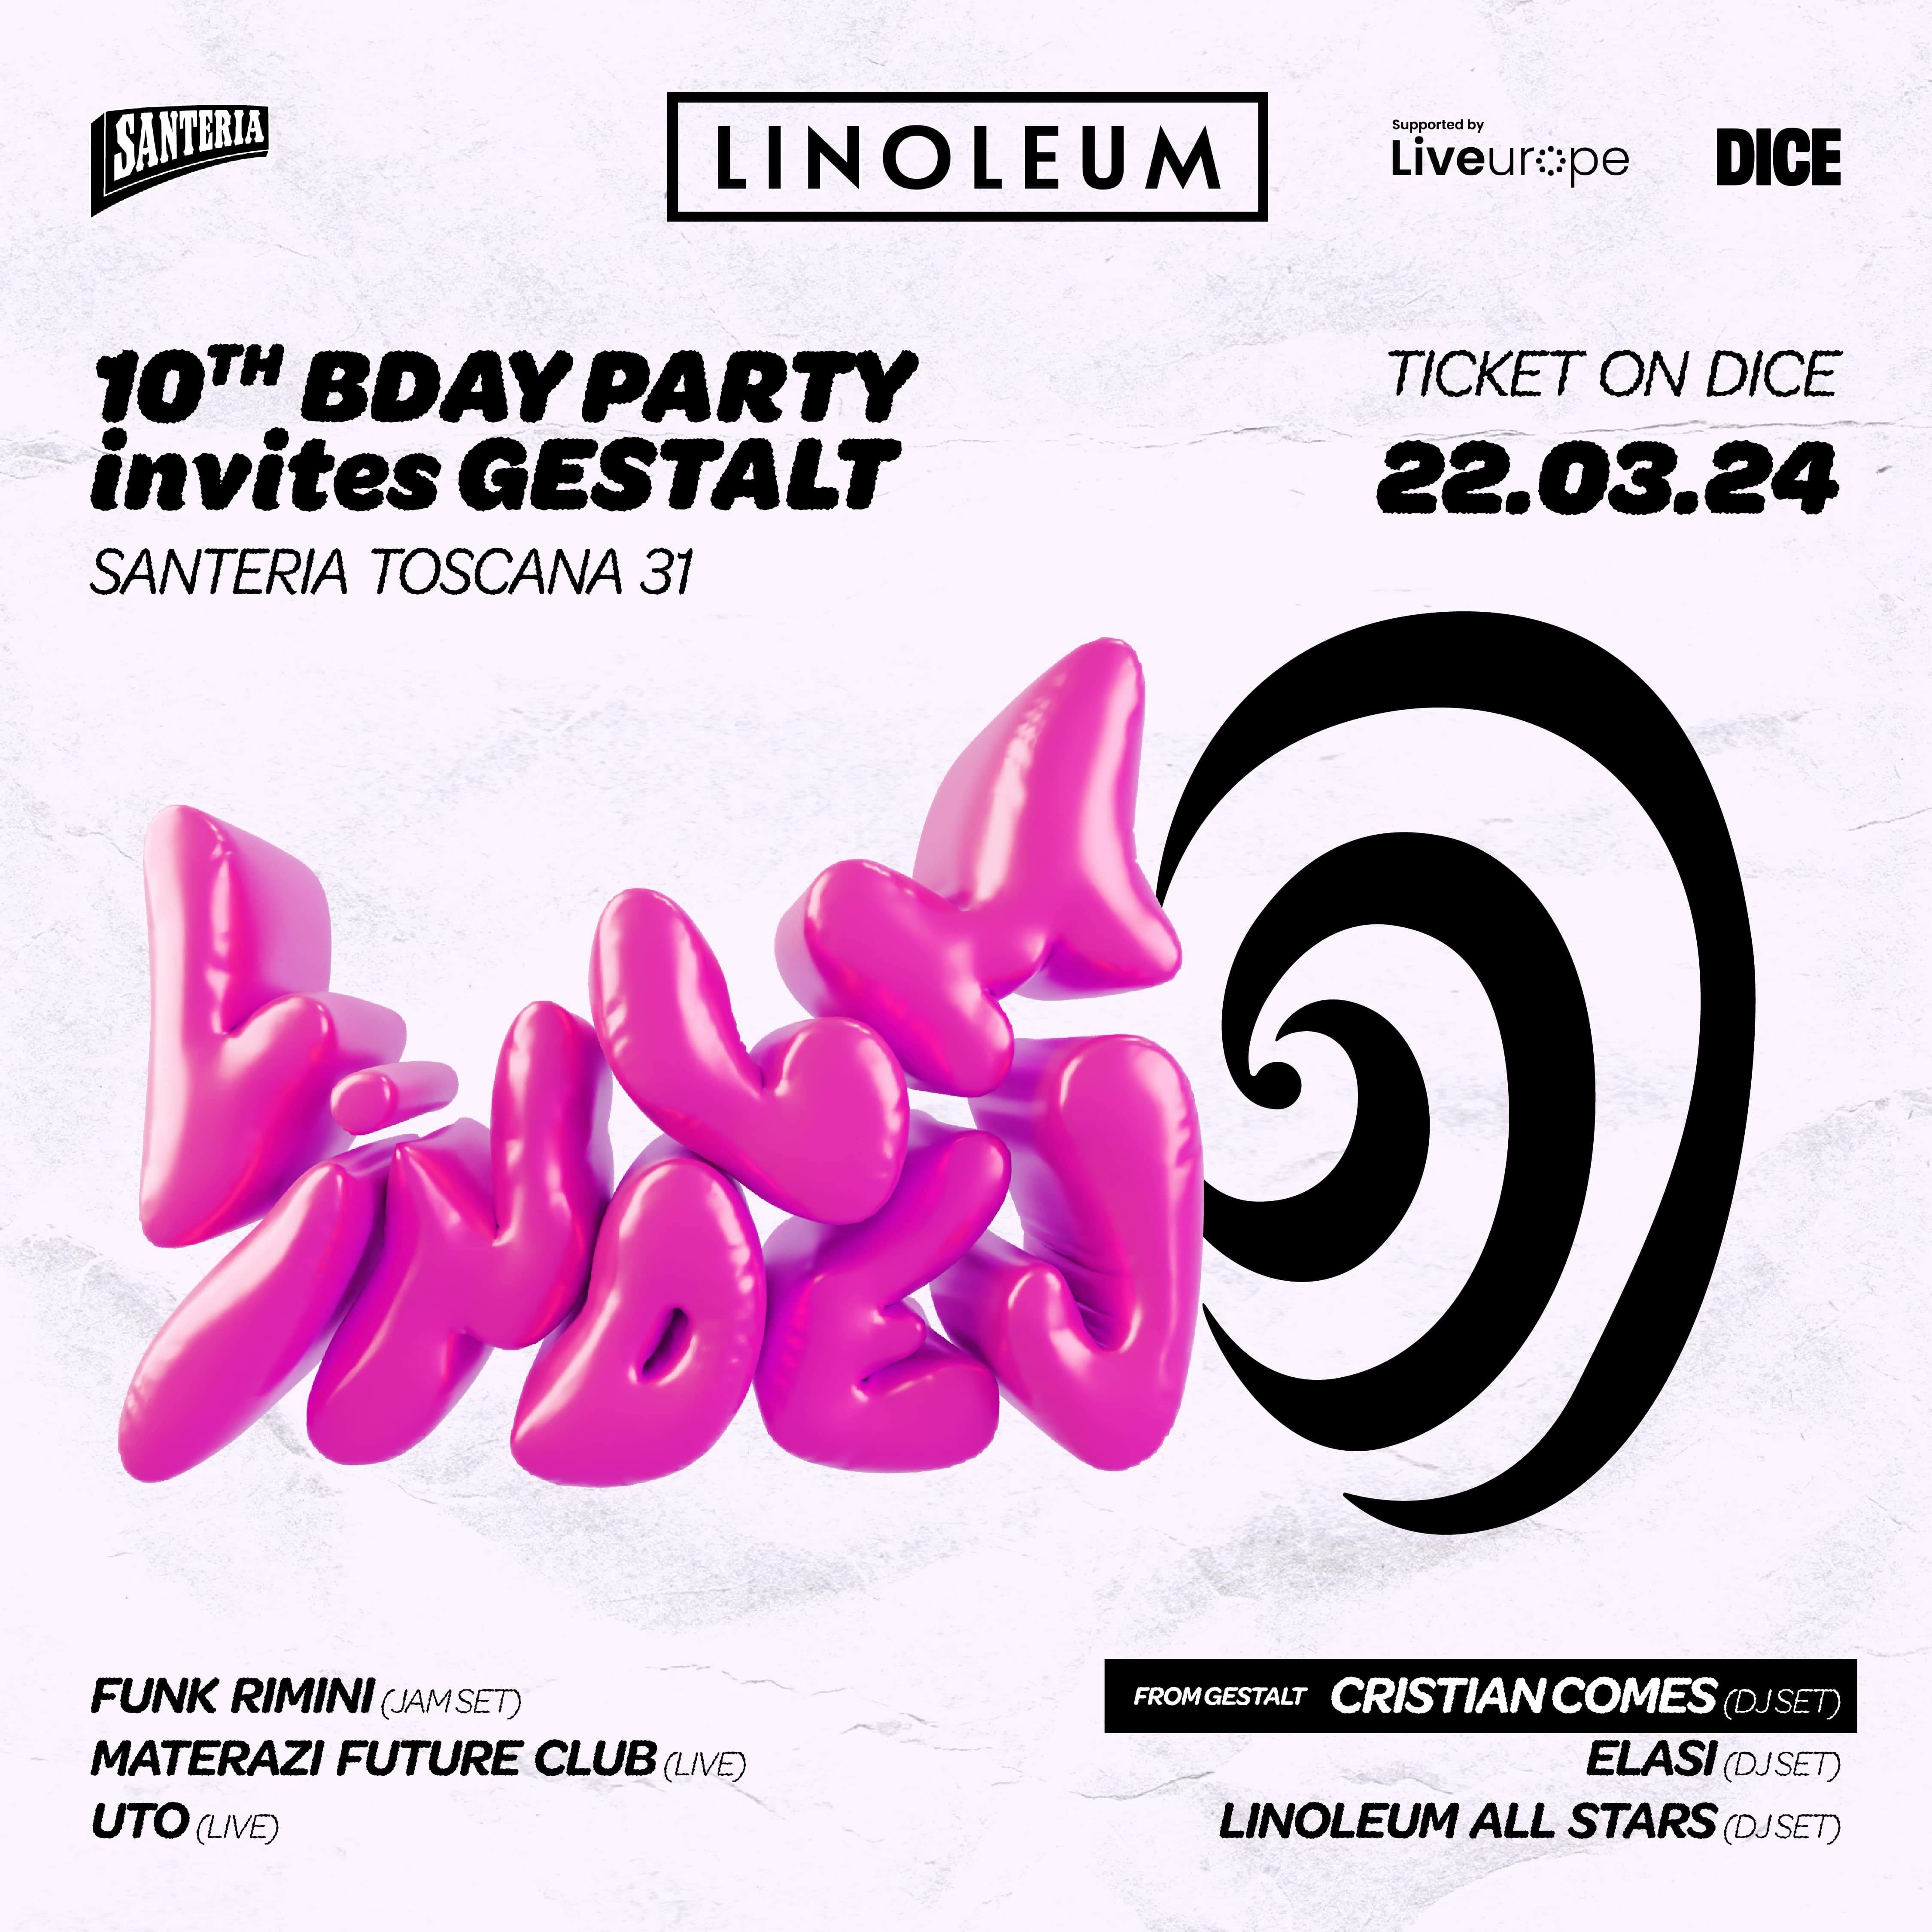 Linoleum 10th Bday Party with Gestalt - フライヤー表